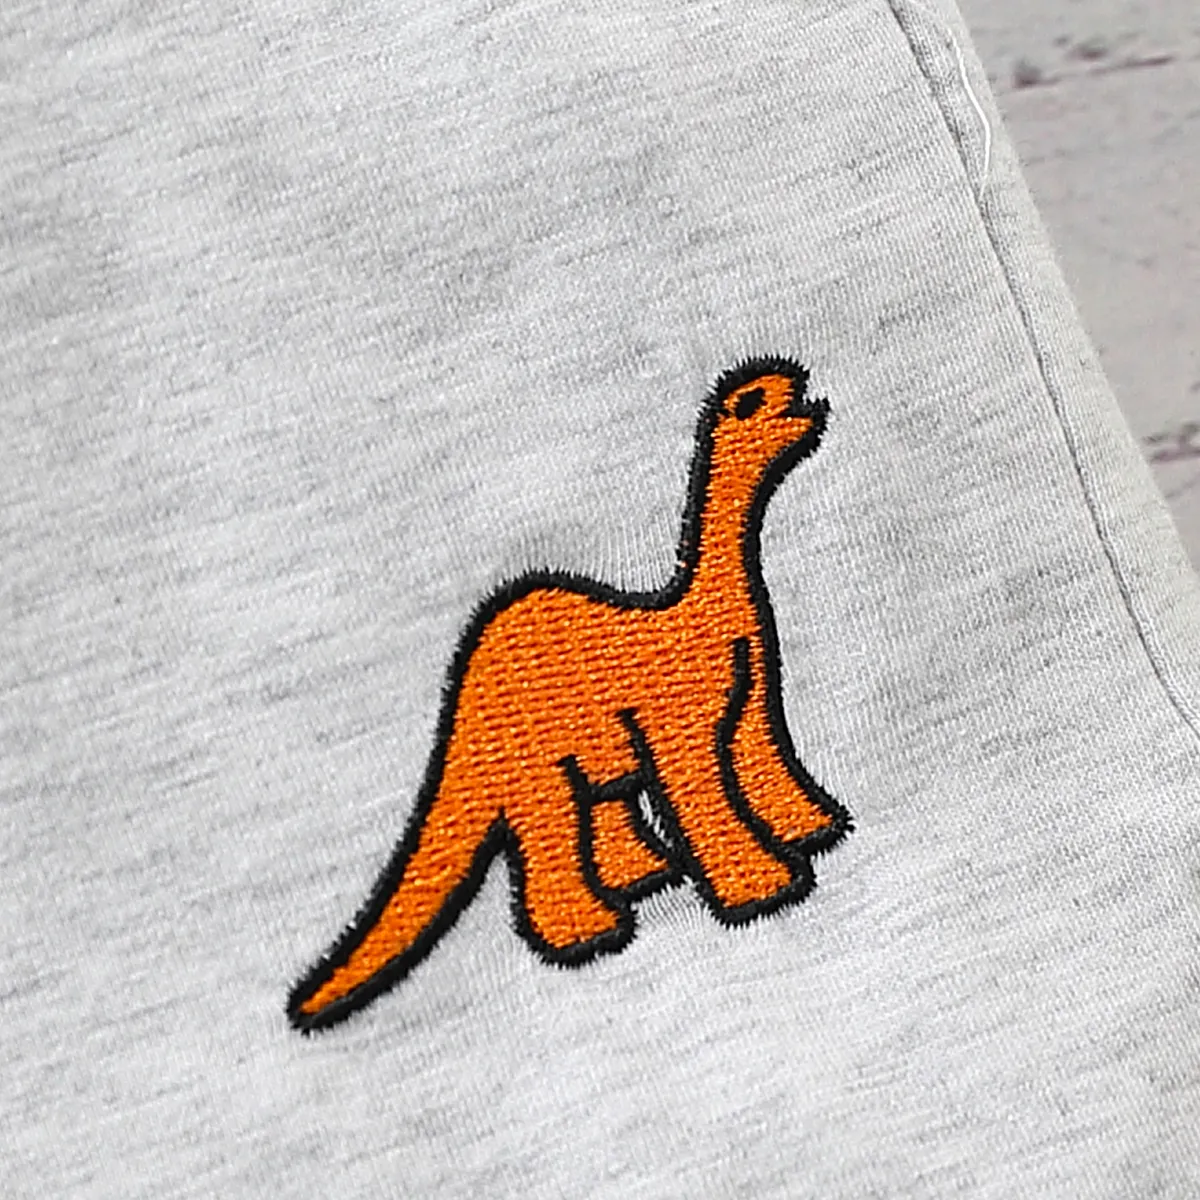 Dinosaur Pattern Toddler Boy Shorts Set, 1pc, Polyester/Spandex Blend, Machine Washable Grey big image 1